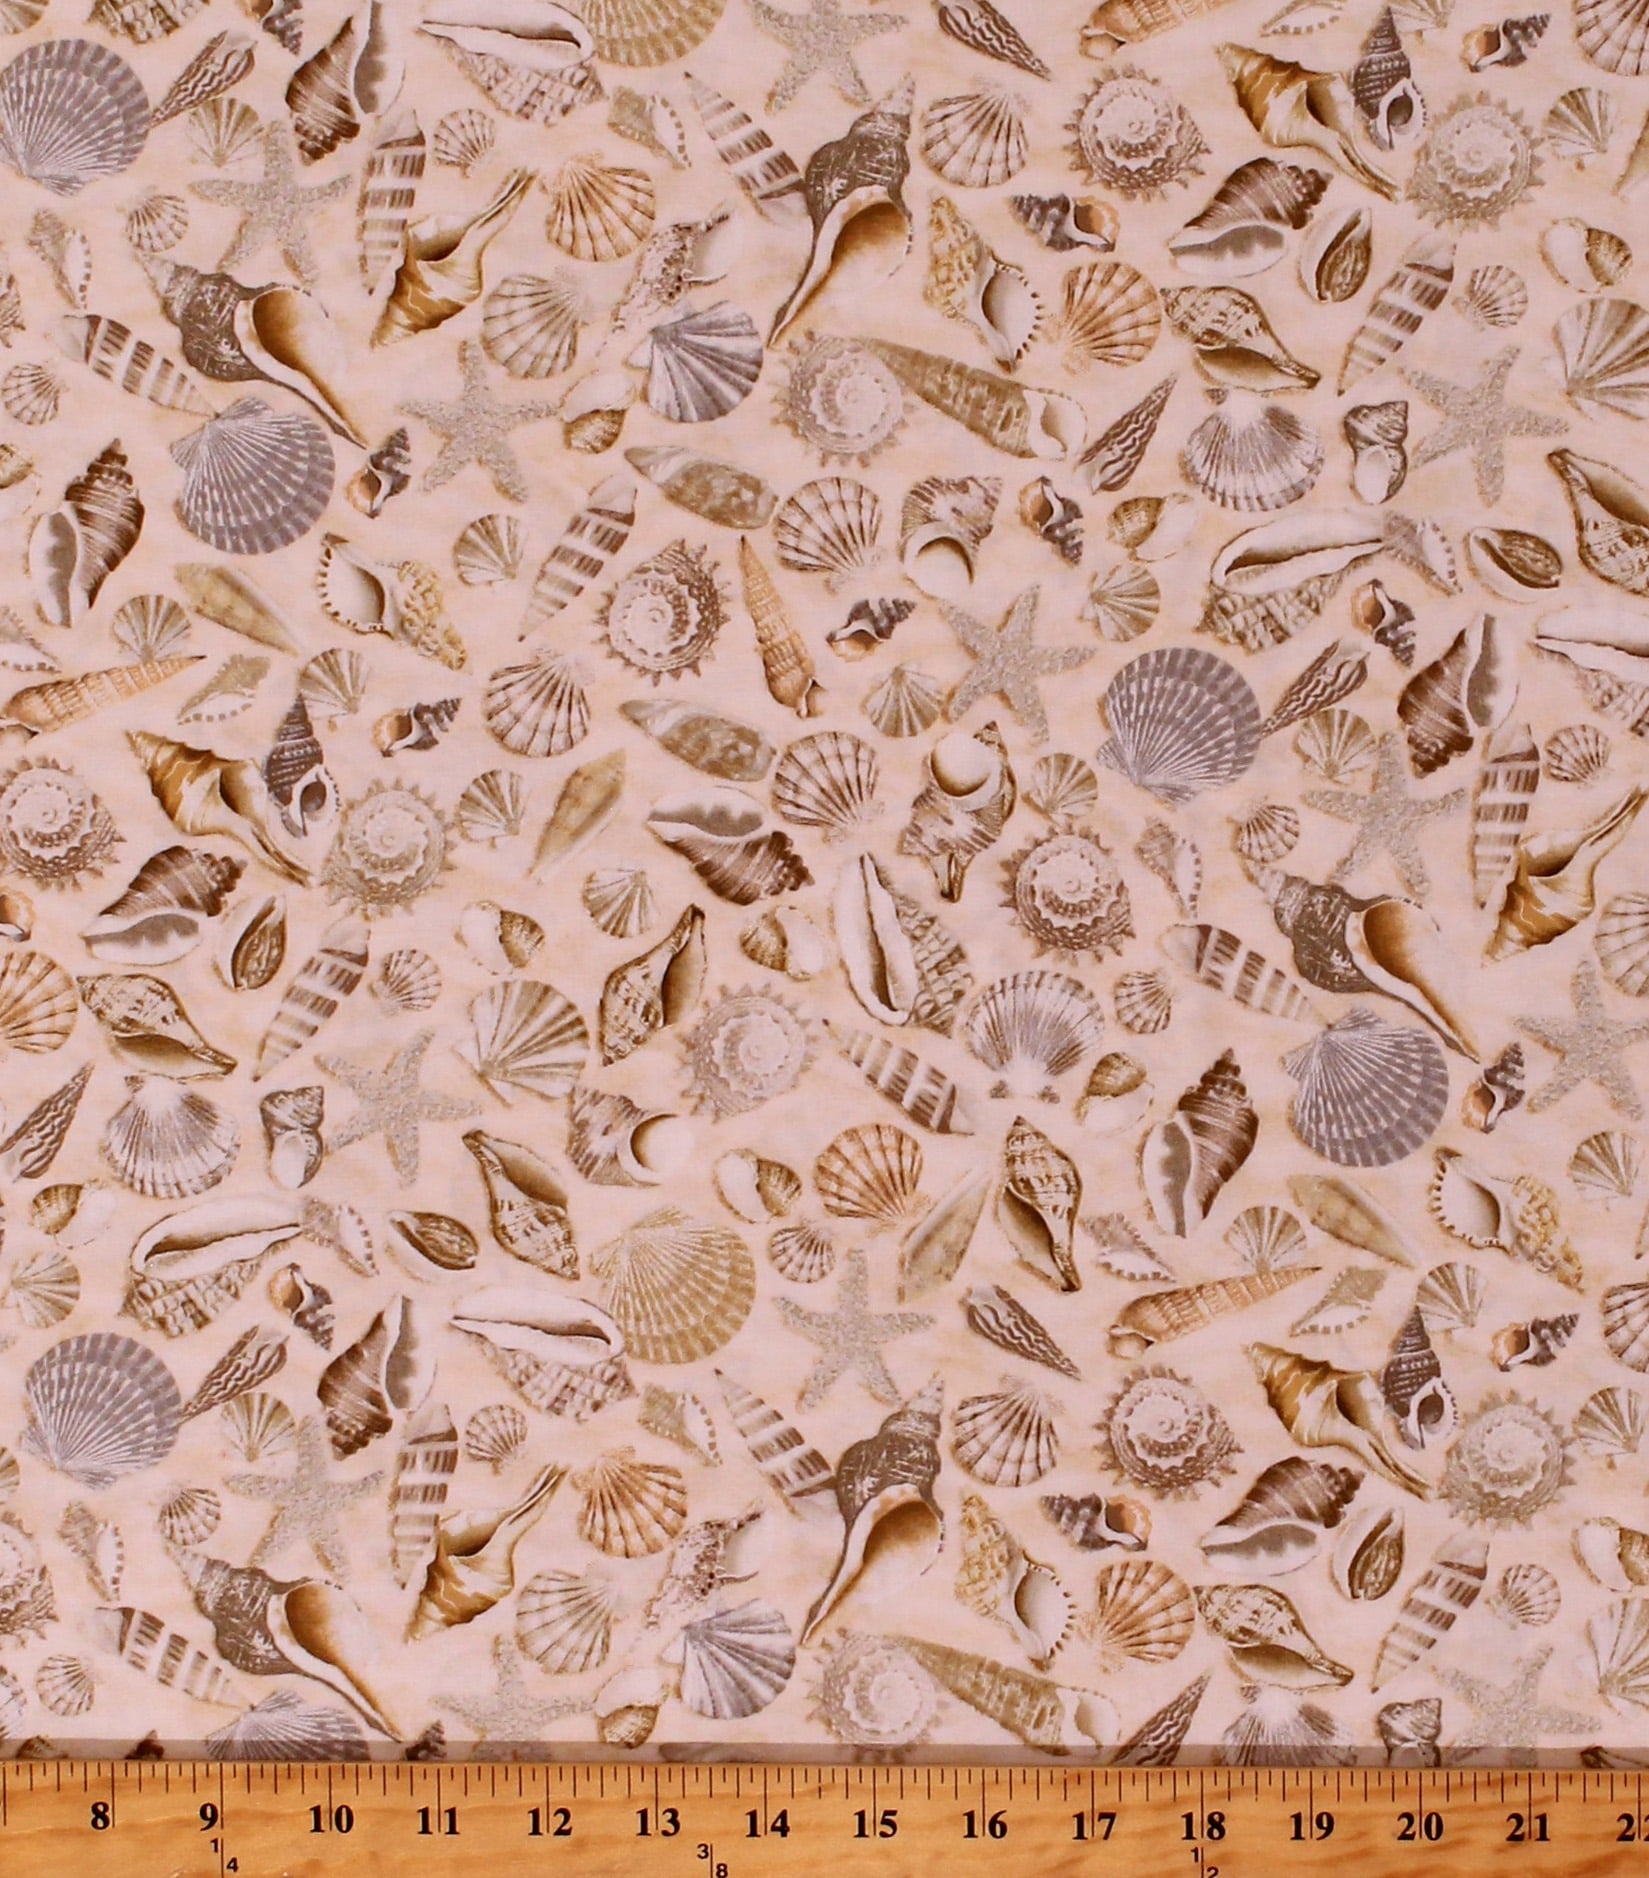 Yard Nautical Sea Shell Allover Cream Cotton Fabric Quilting Treasures Sea 